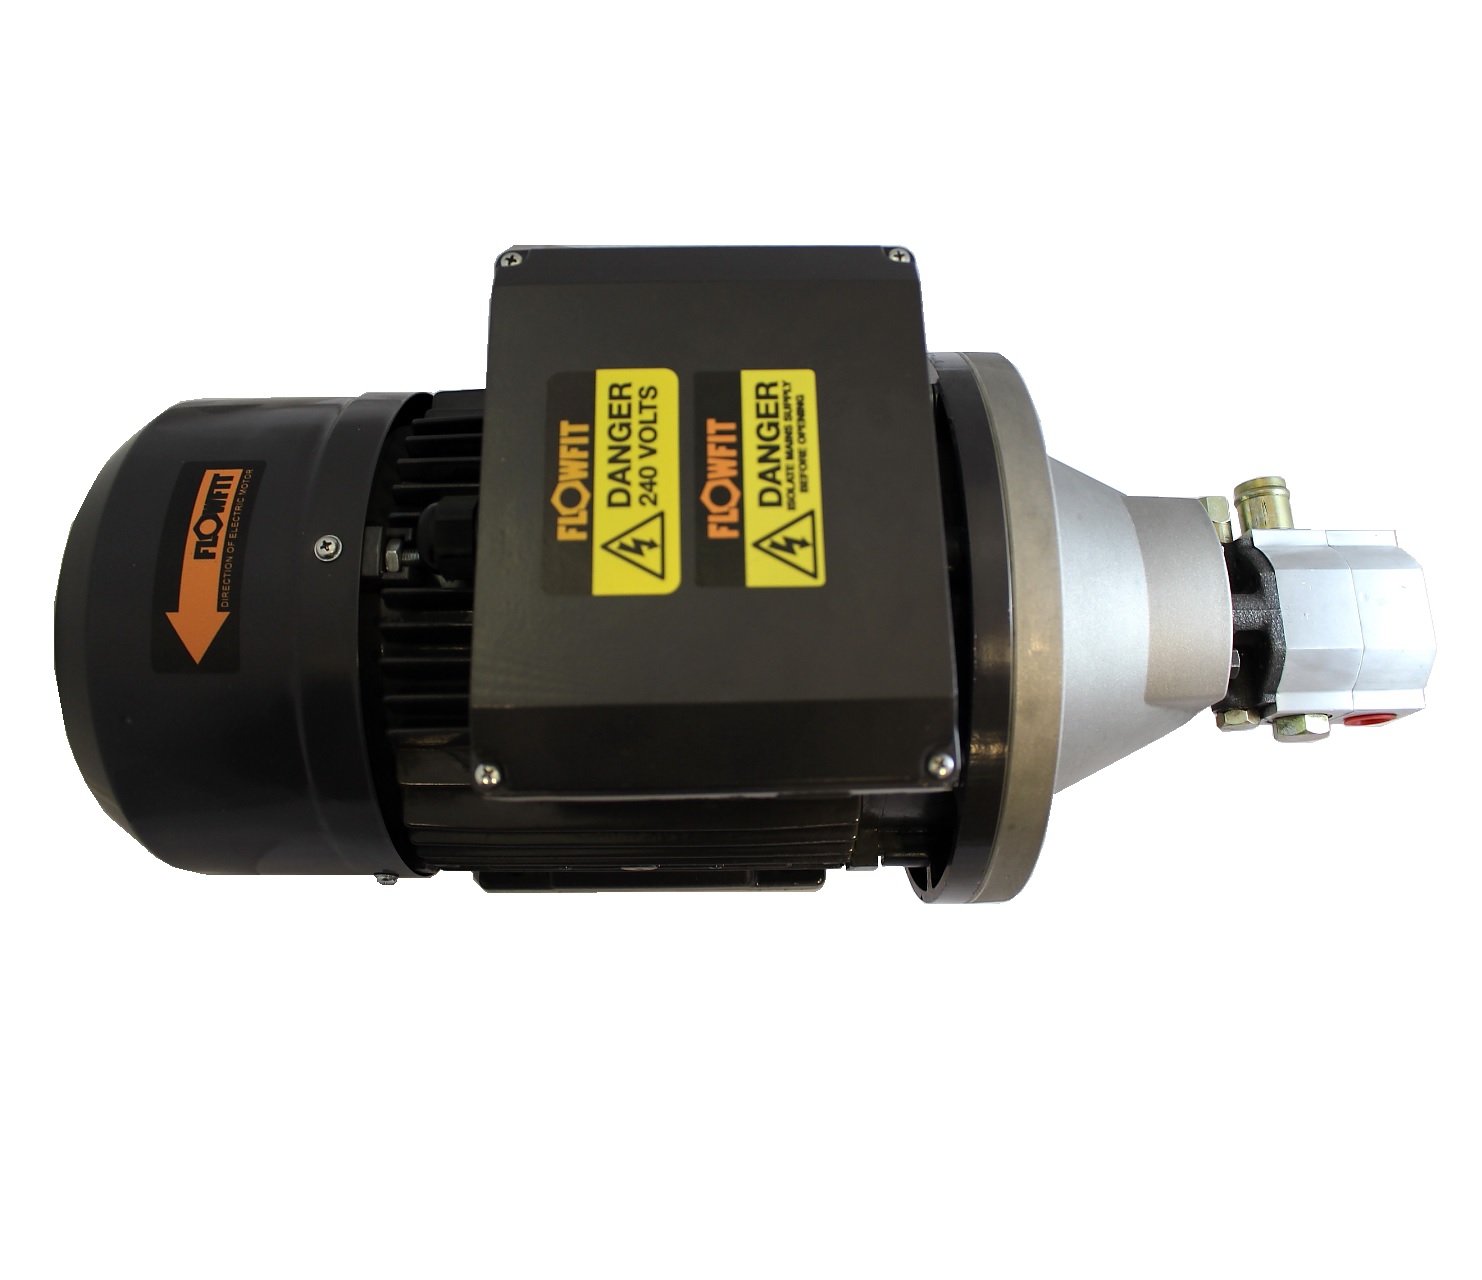 Hydraulic Electric Motor Pump Set 3.7KW 240V Single Phase (1PH) with 8GPM Hi-Lo Pump